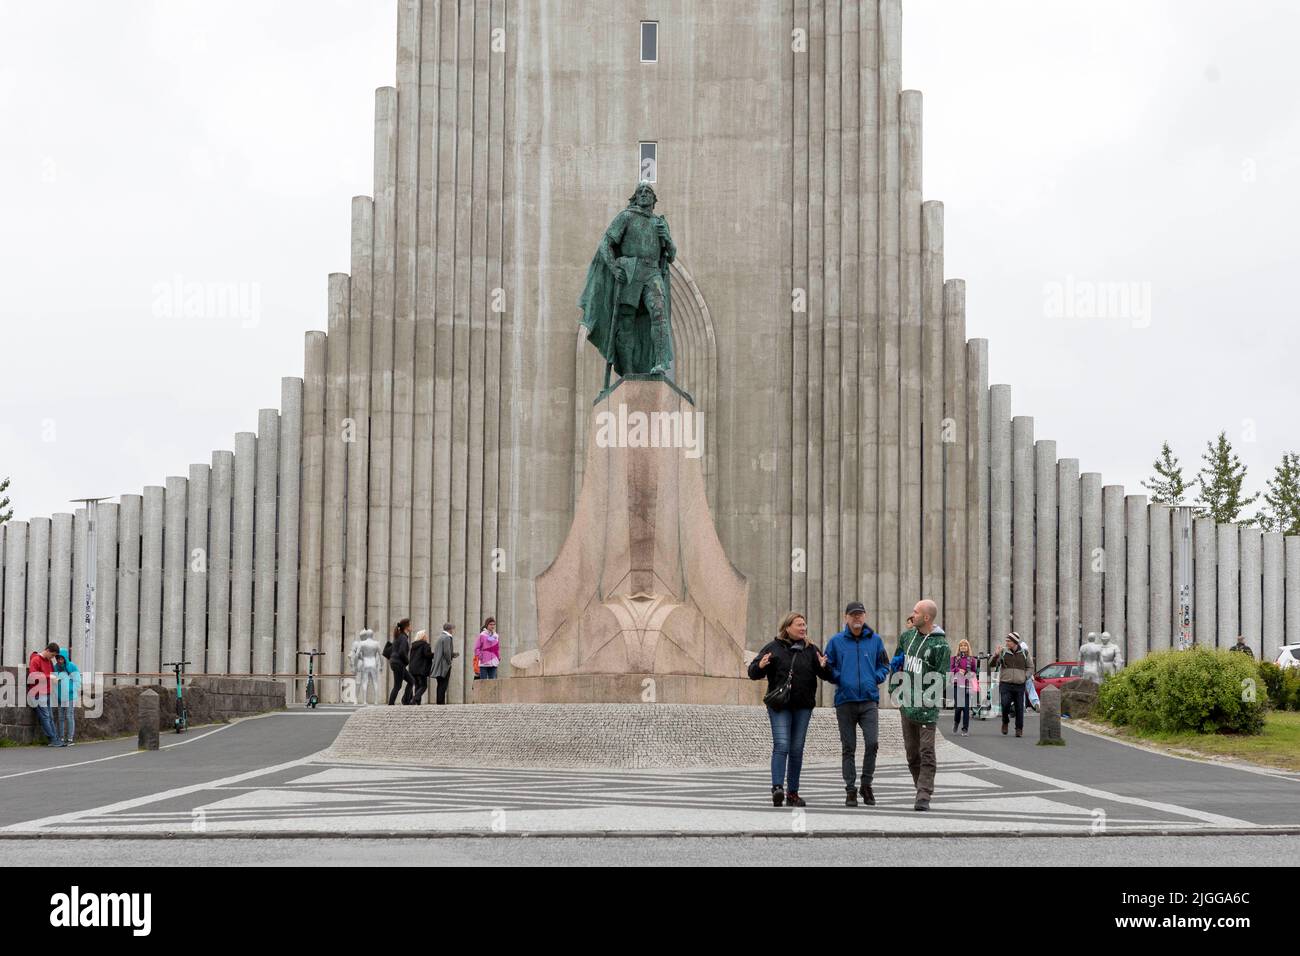 A general view of Hallgrímskirkja, Church of Iceland, in Reykjavík, Iceland.  Image shot on 10th July 2022.  © Belinda Jiao   jiao.bilin@gmail.com 075 Stock Photo